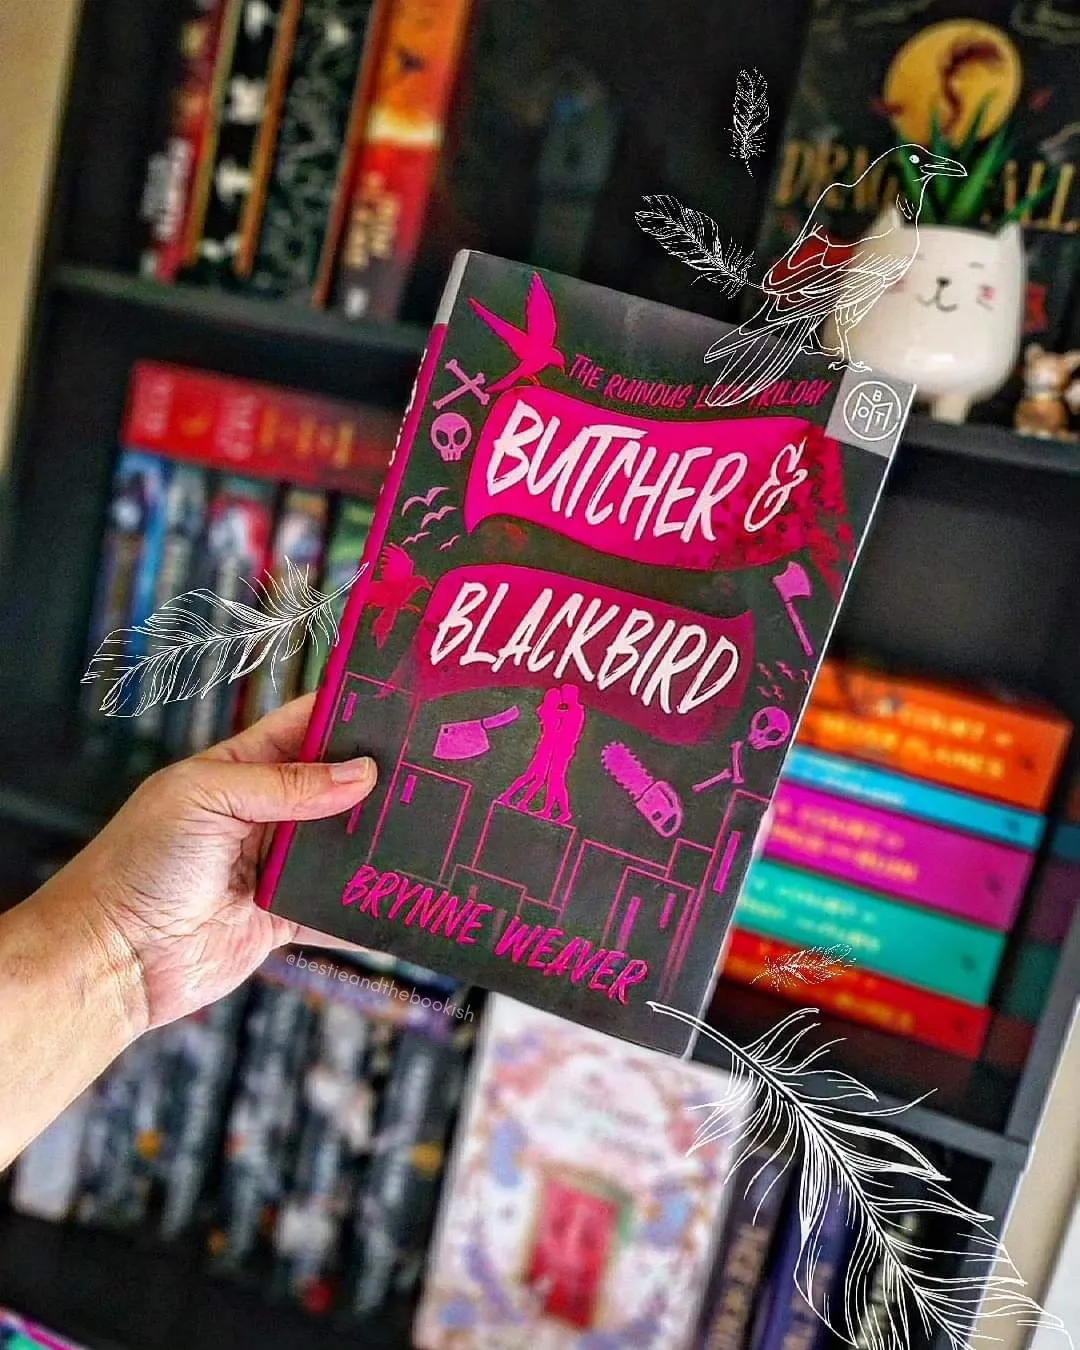 Review // Butcher & Blackbird by Brynne Weaver